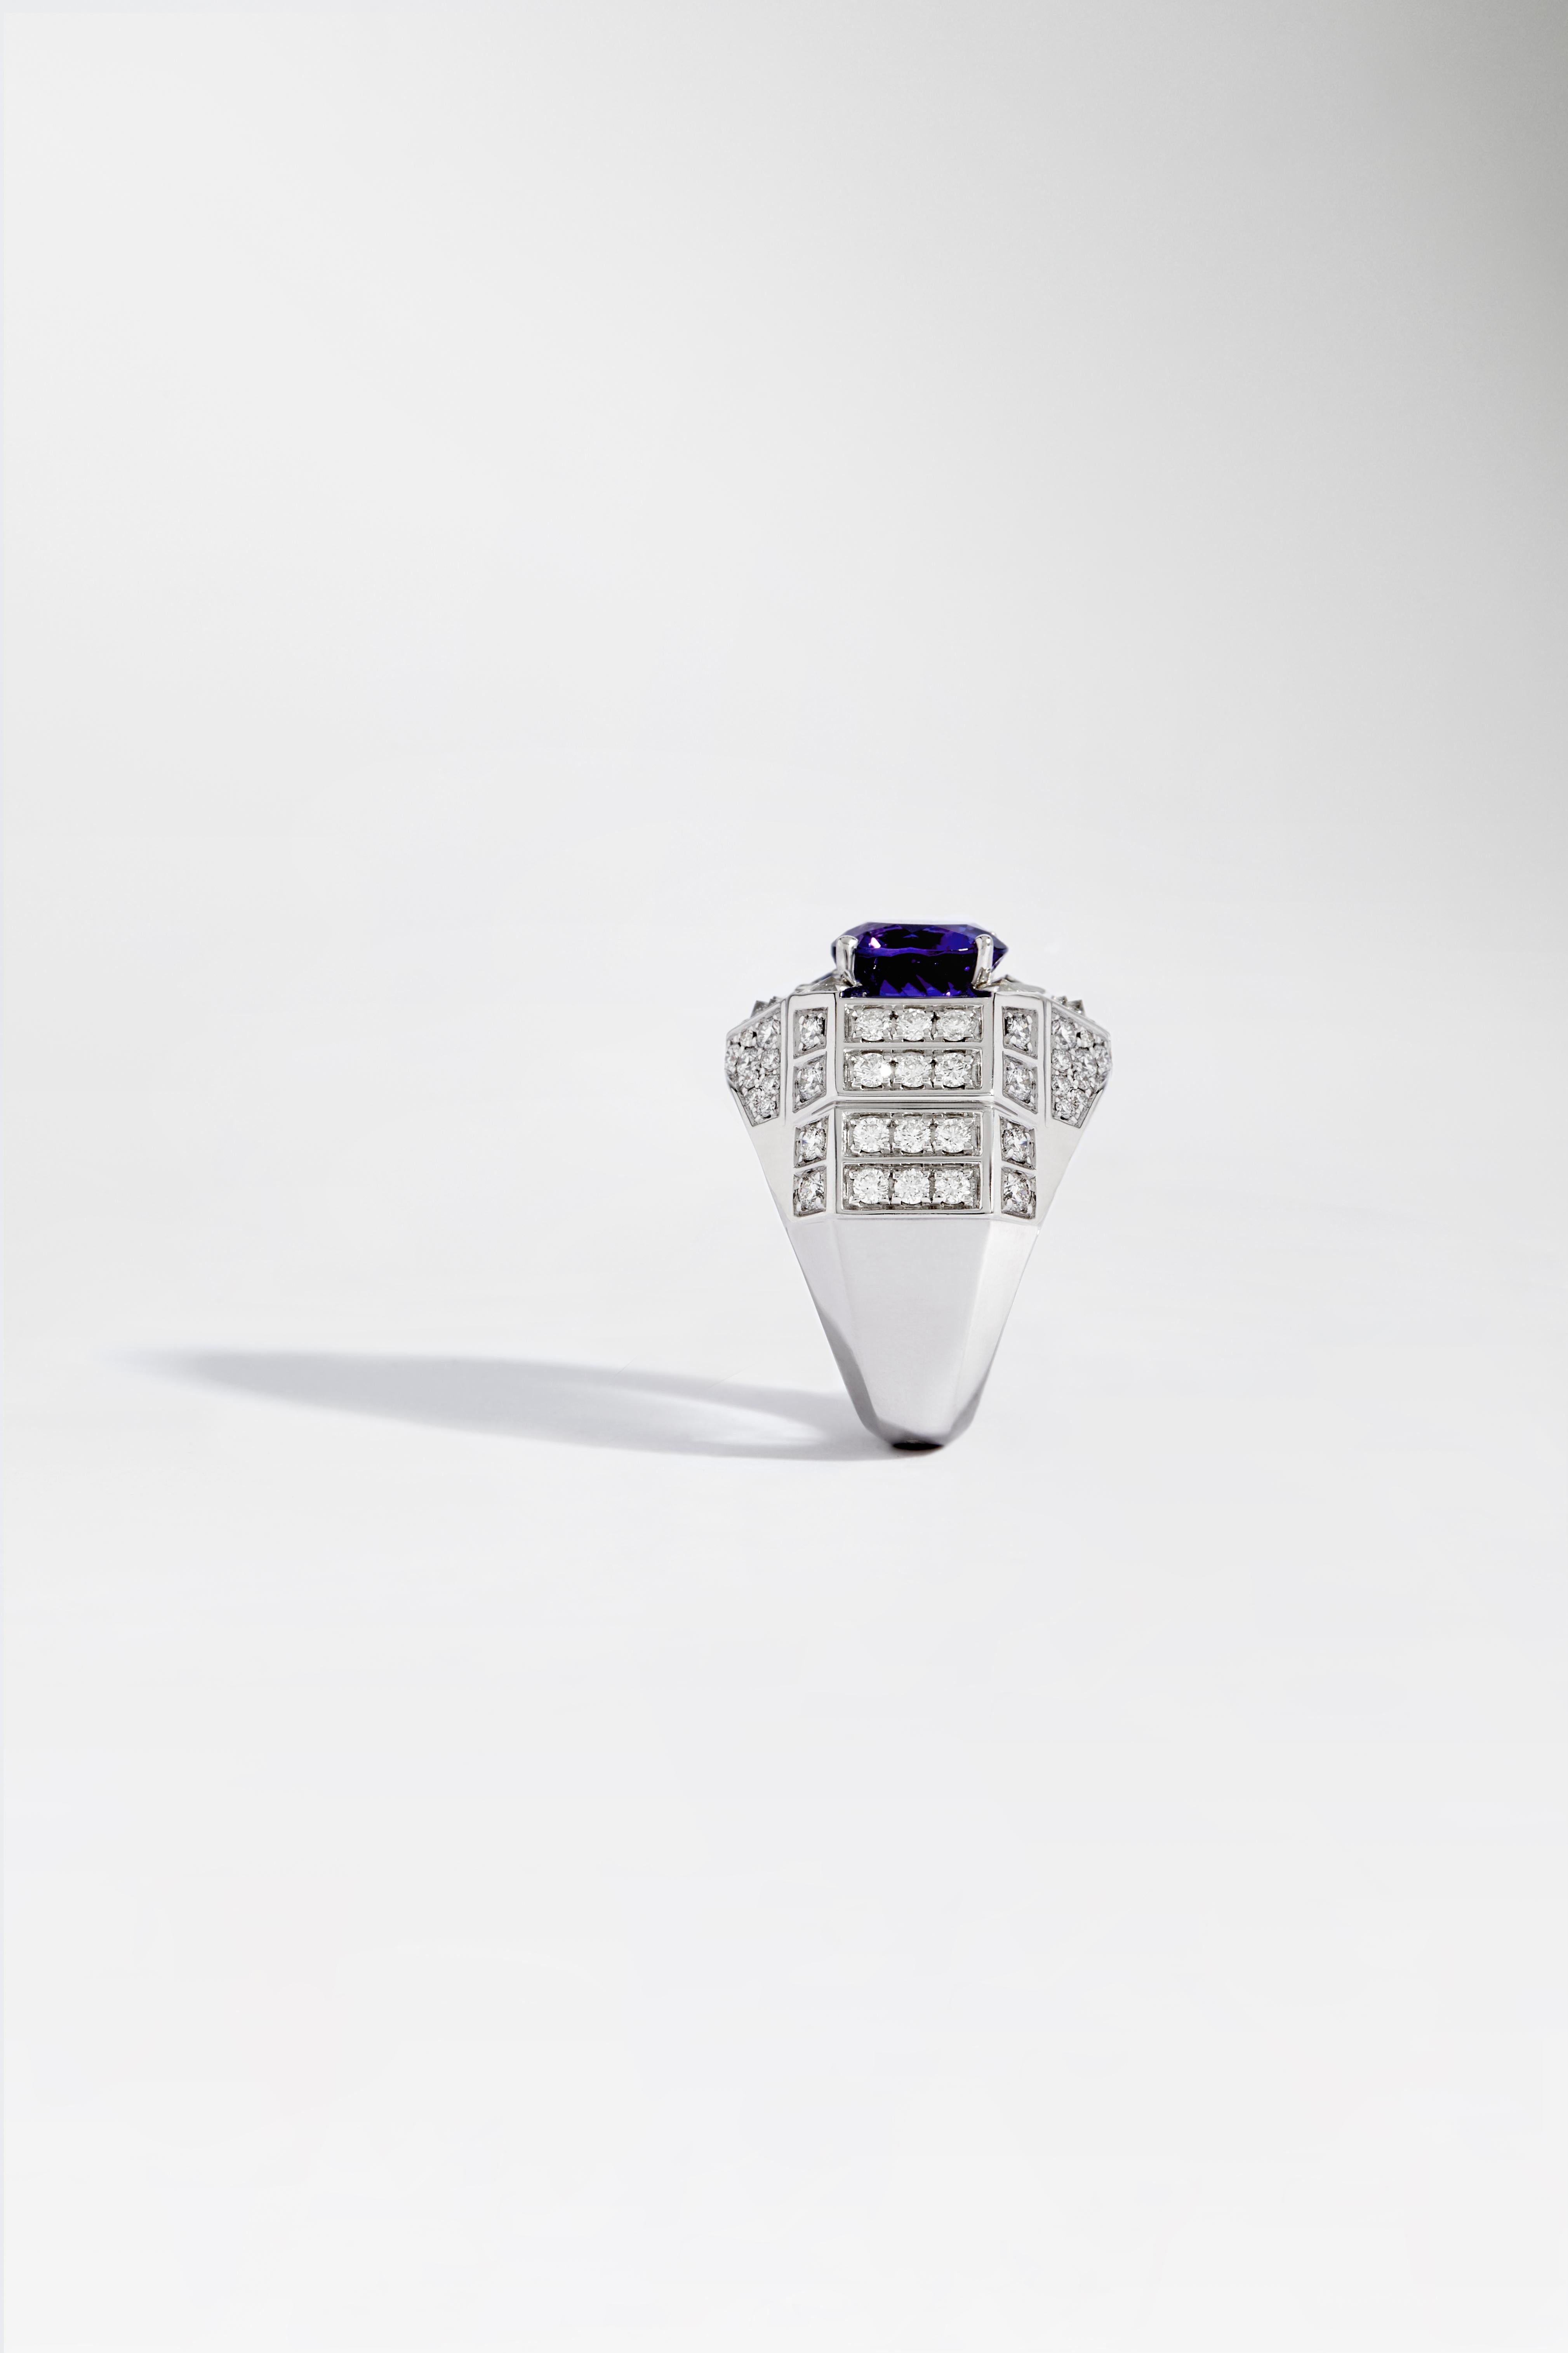 Art Deco STATEMENT Paris - High Jewelry Diamonds Ring with Tanzanite Center Stone 3.52ct For Sale